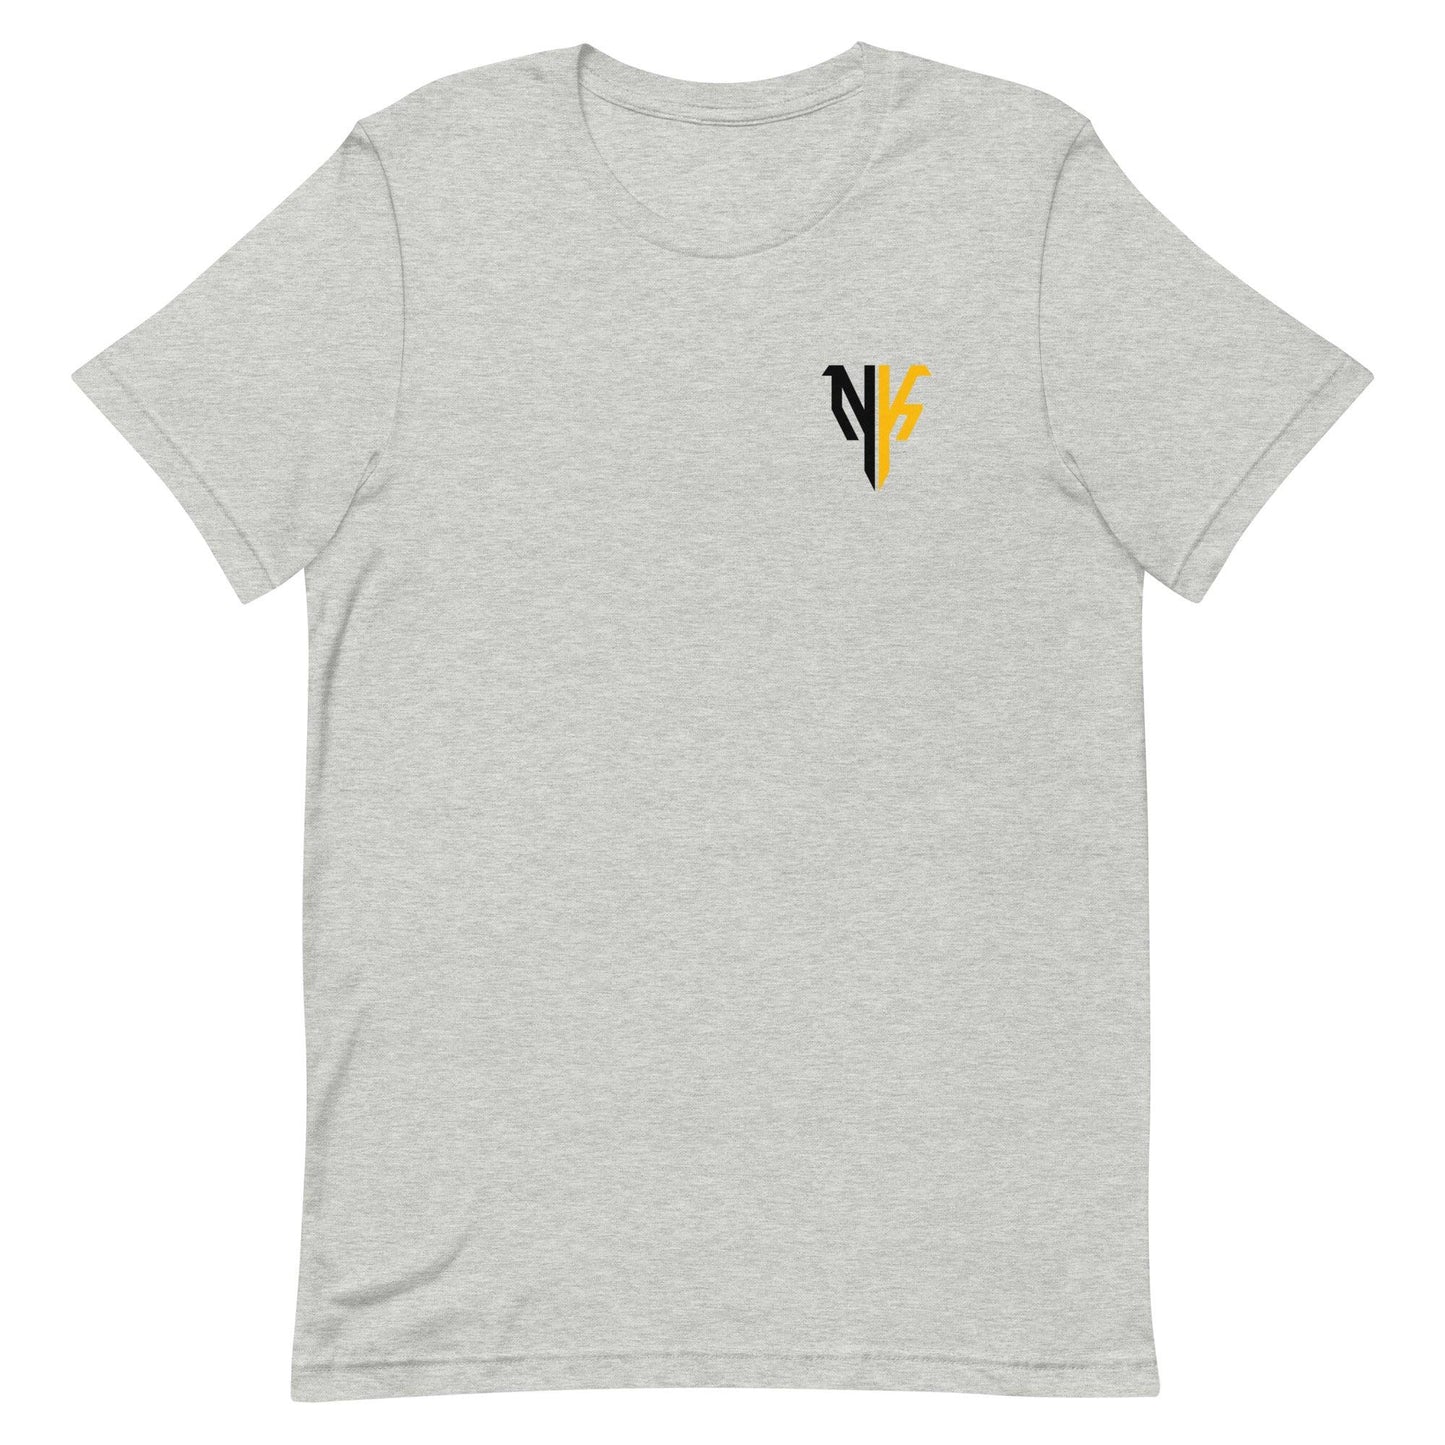 Nick Kern "Essential" t-shirt - Fan Arch